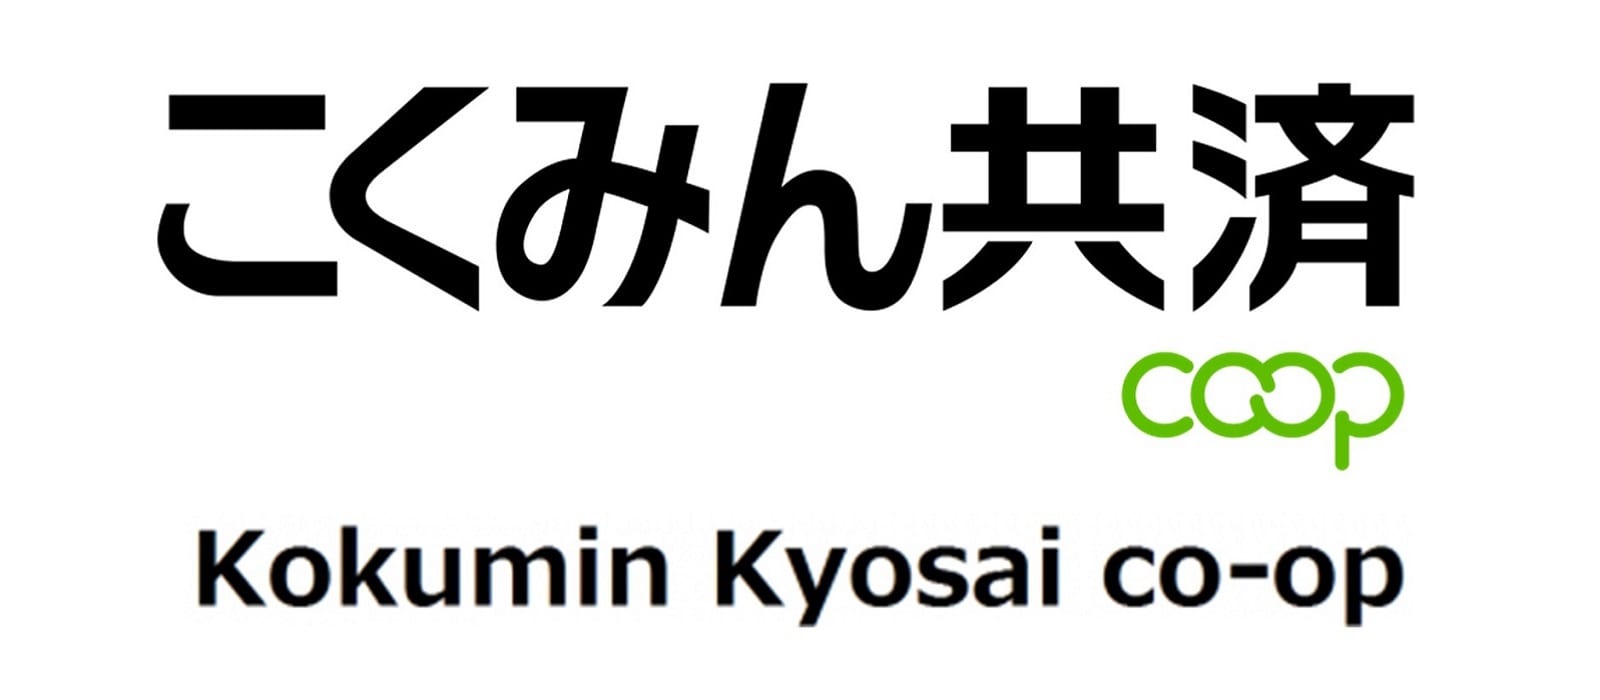 kokumin-kyosai-zenrosai-logo-brand